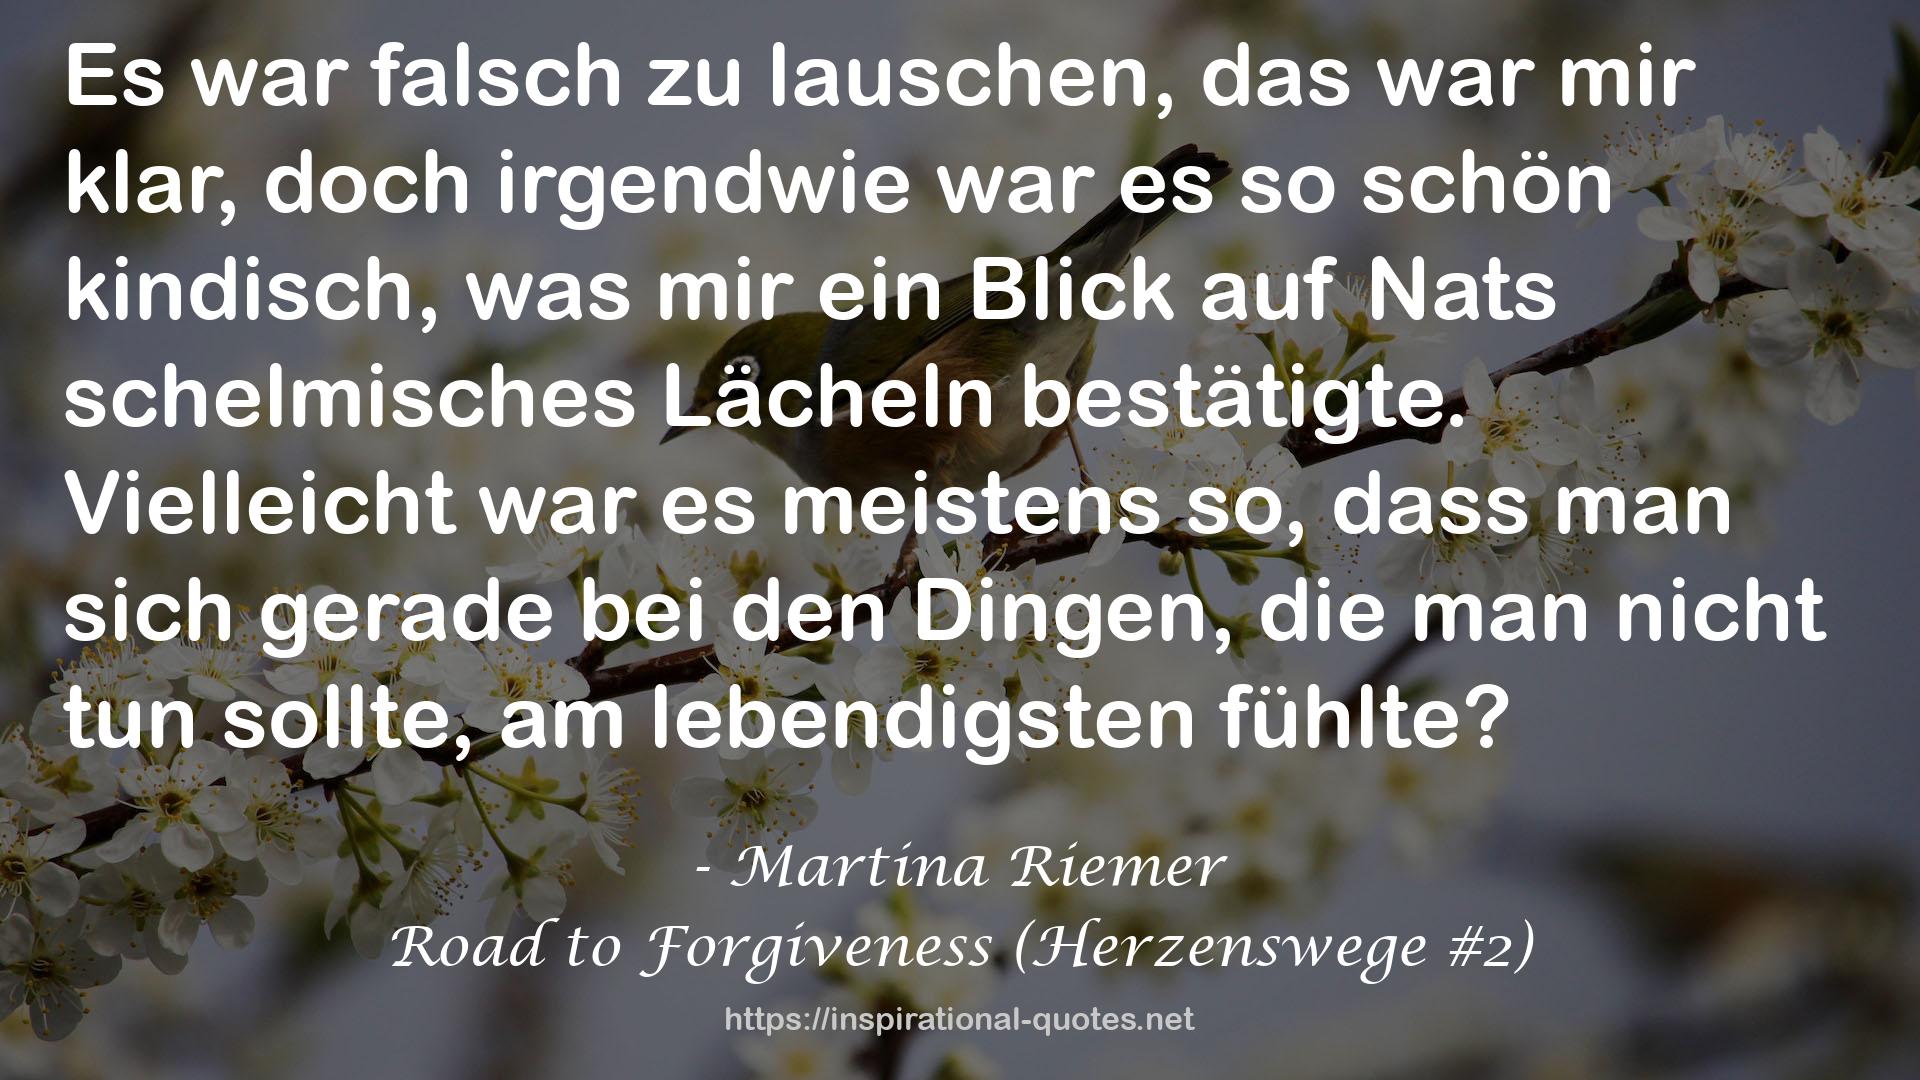 Road to Forgiveness (Herzenswege #2) QUOTES